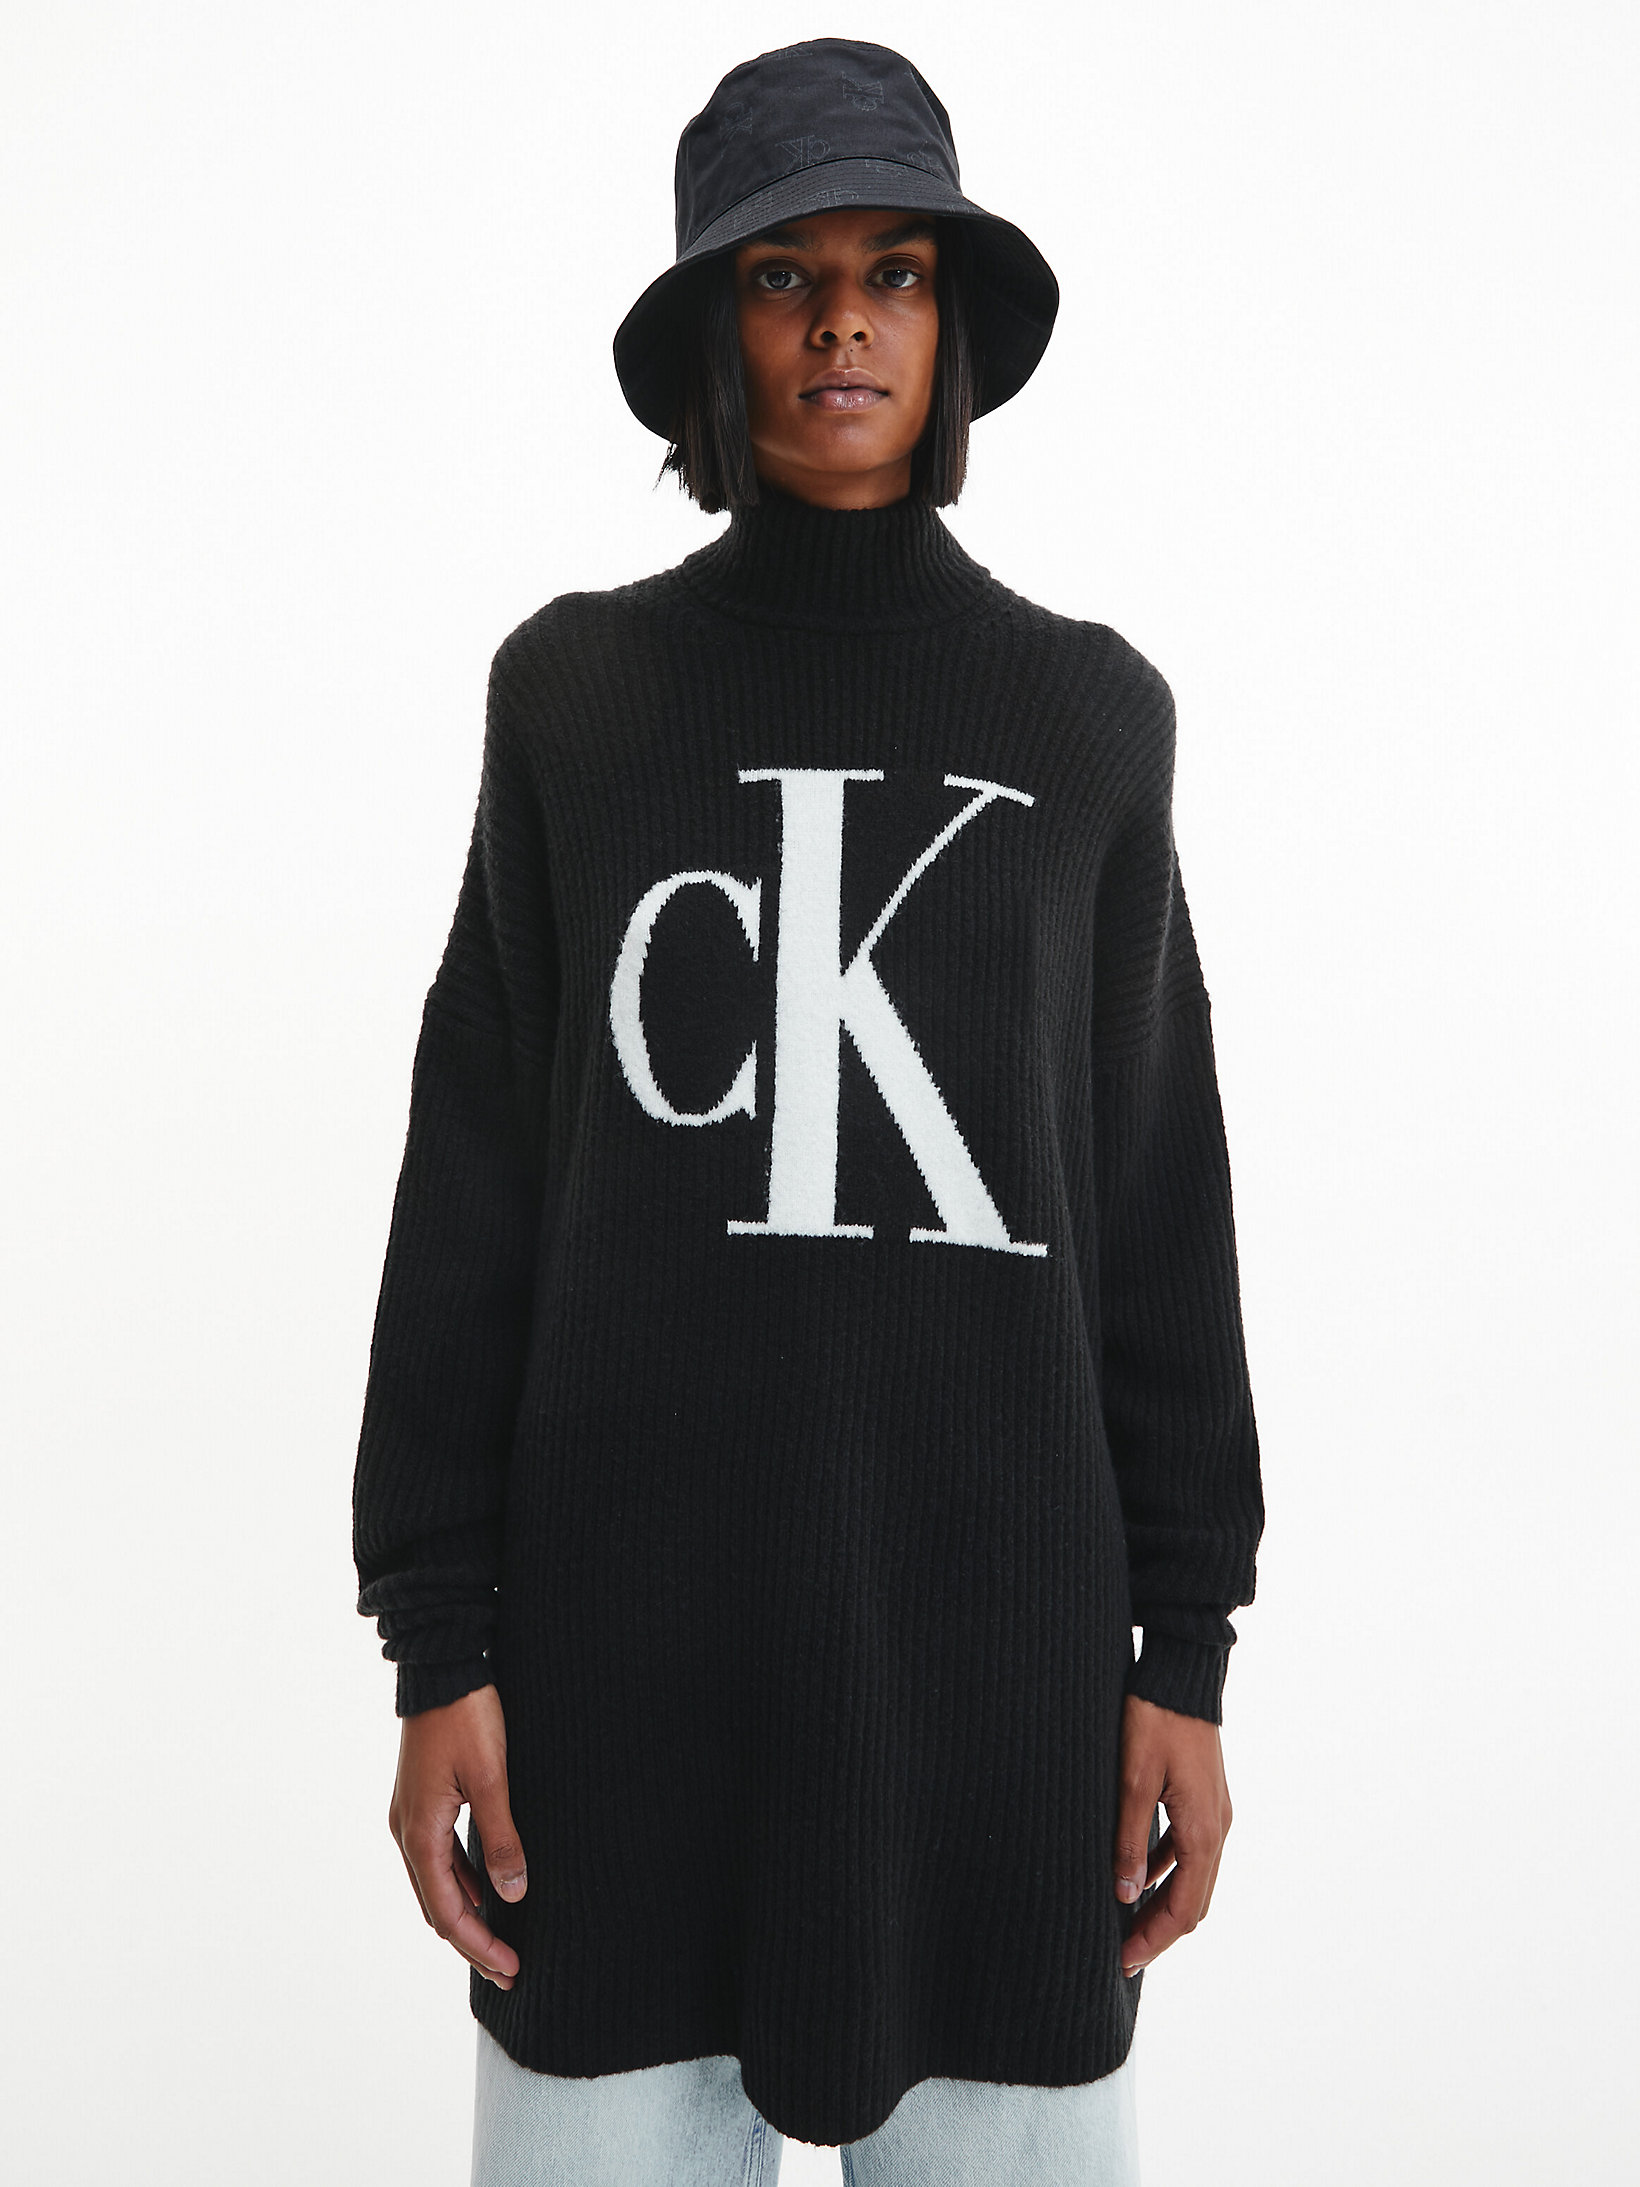 CK Black > Габаритный джемпер с монограммой > undefined Женщины - Calvin Klein